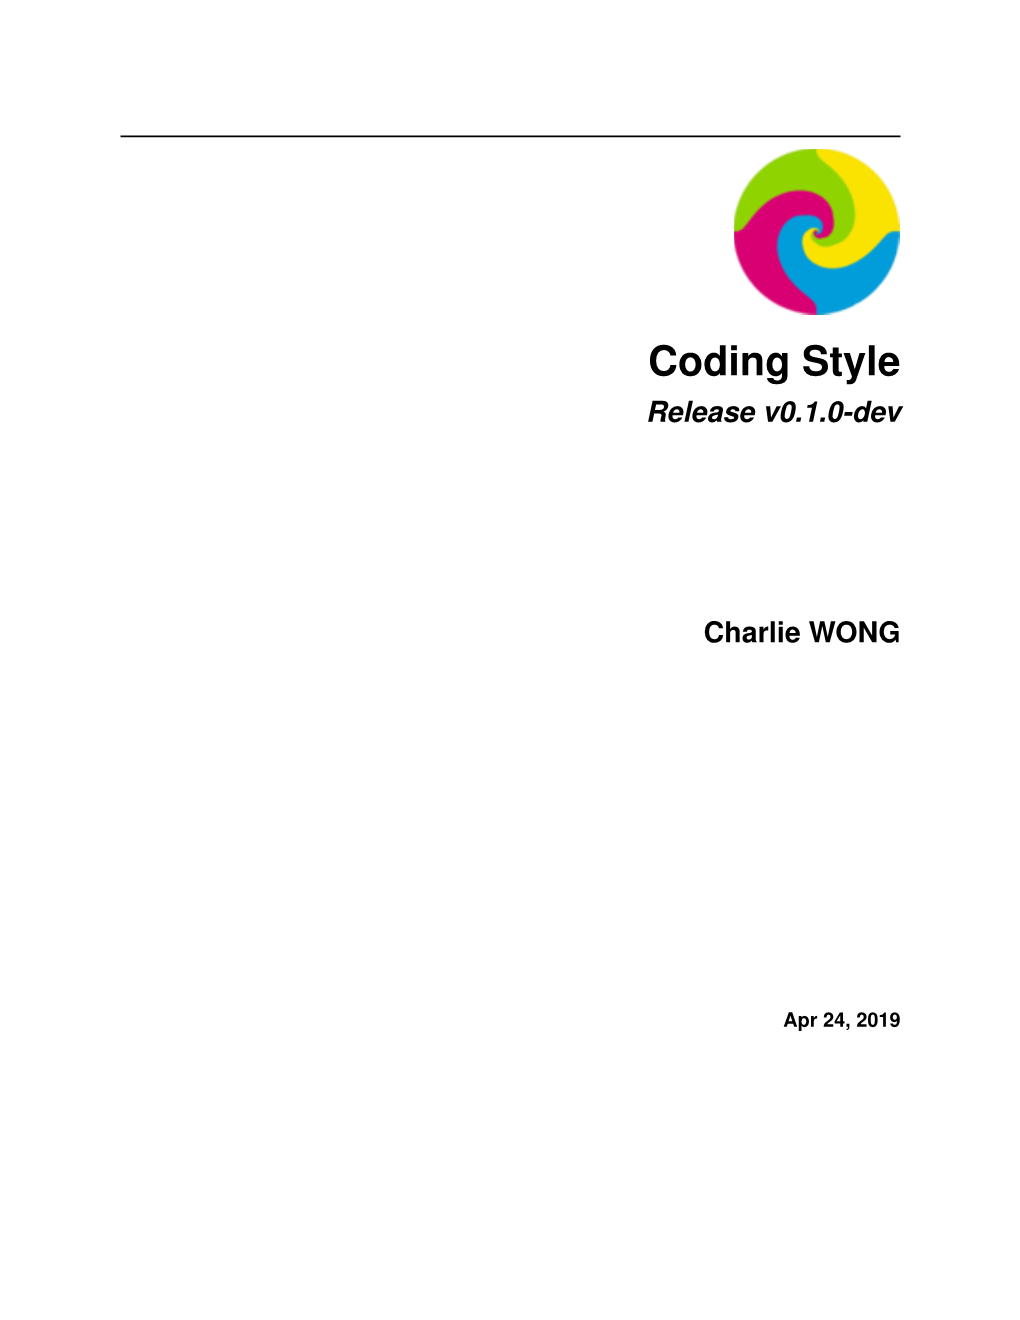 Coding Style Release V0.1.0-Dev